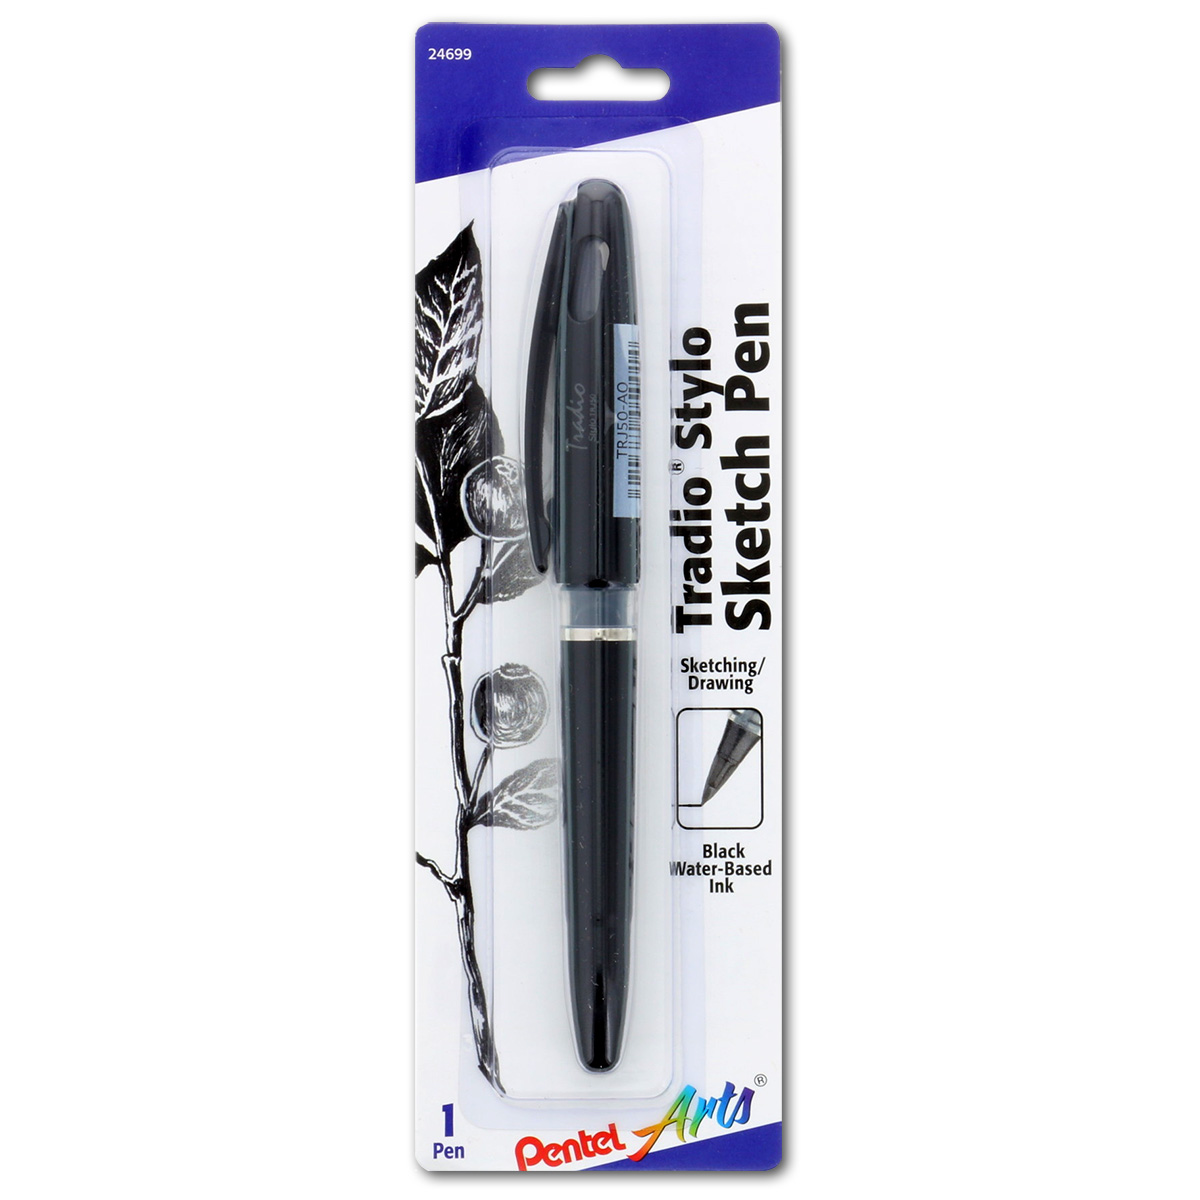 Great Horned Owl Pen Drawing with Black Ink by ElizaNeilande on DeviantArt